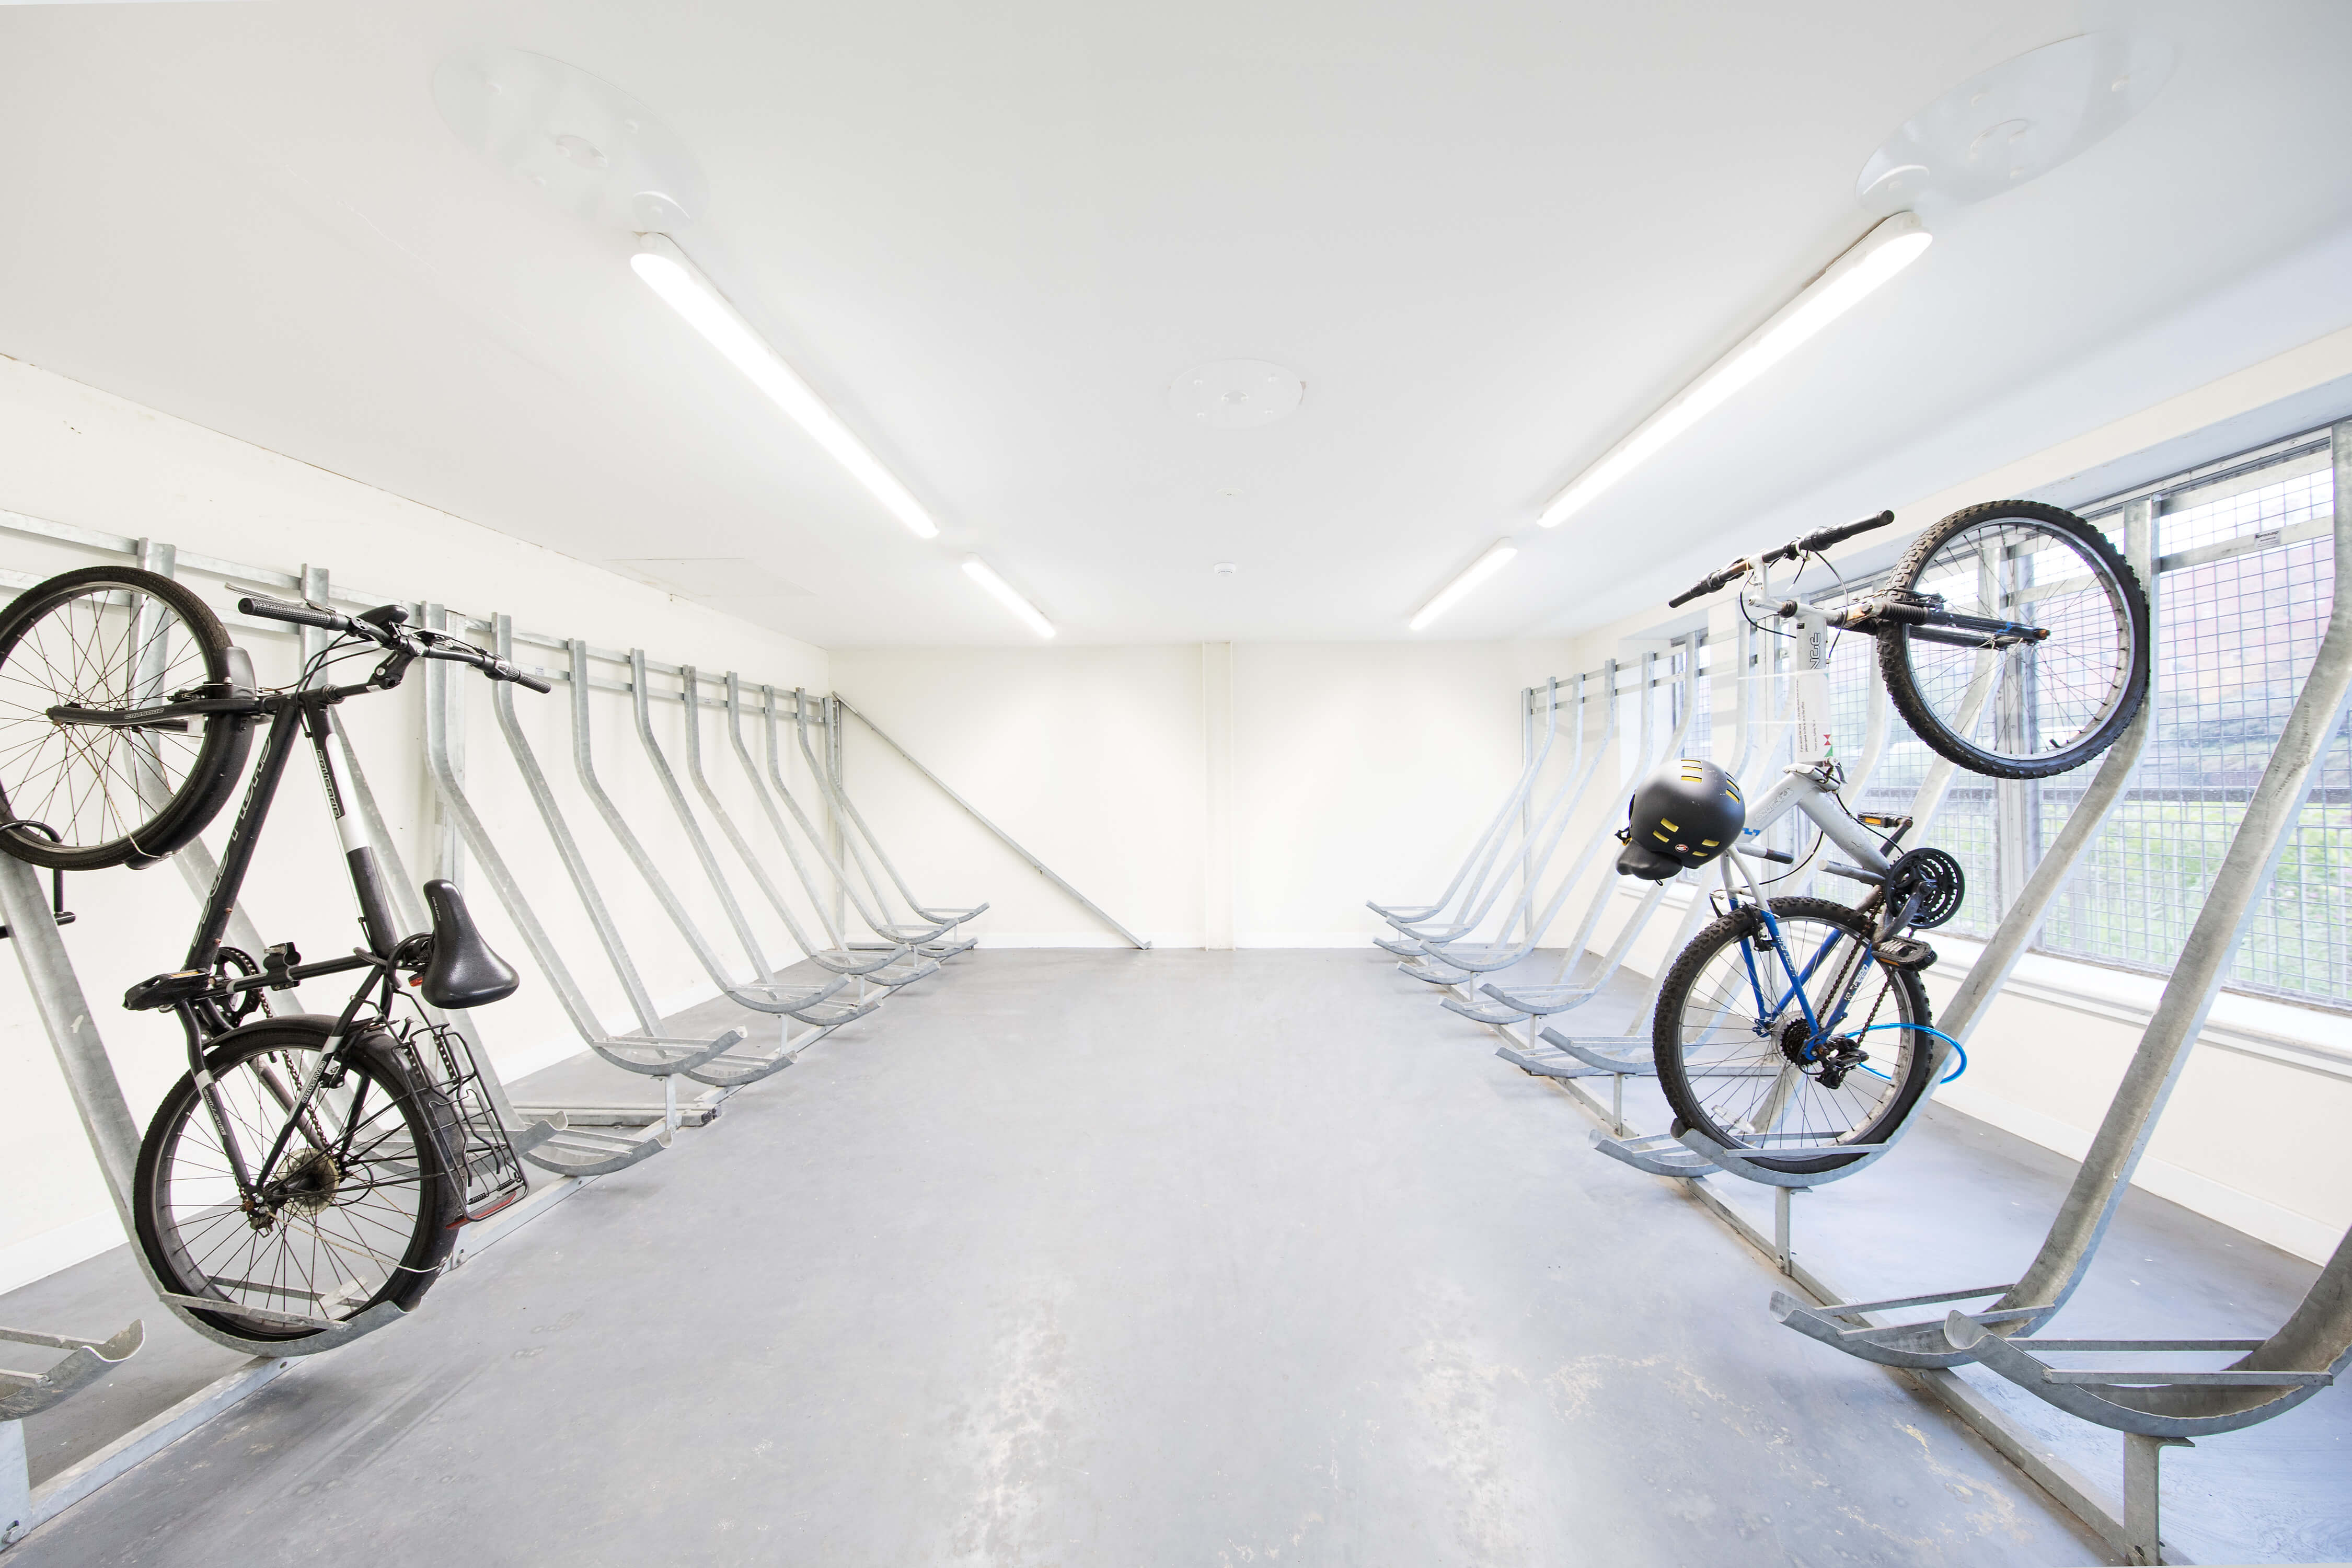 Bikes on racks in a storage room